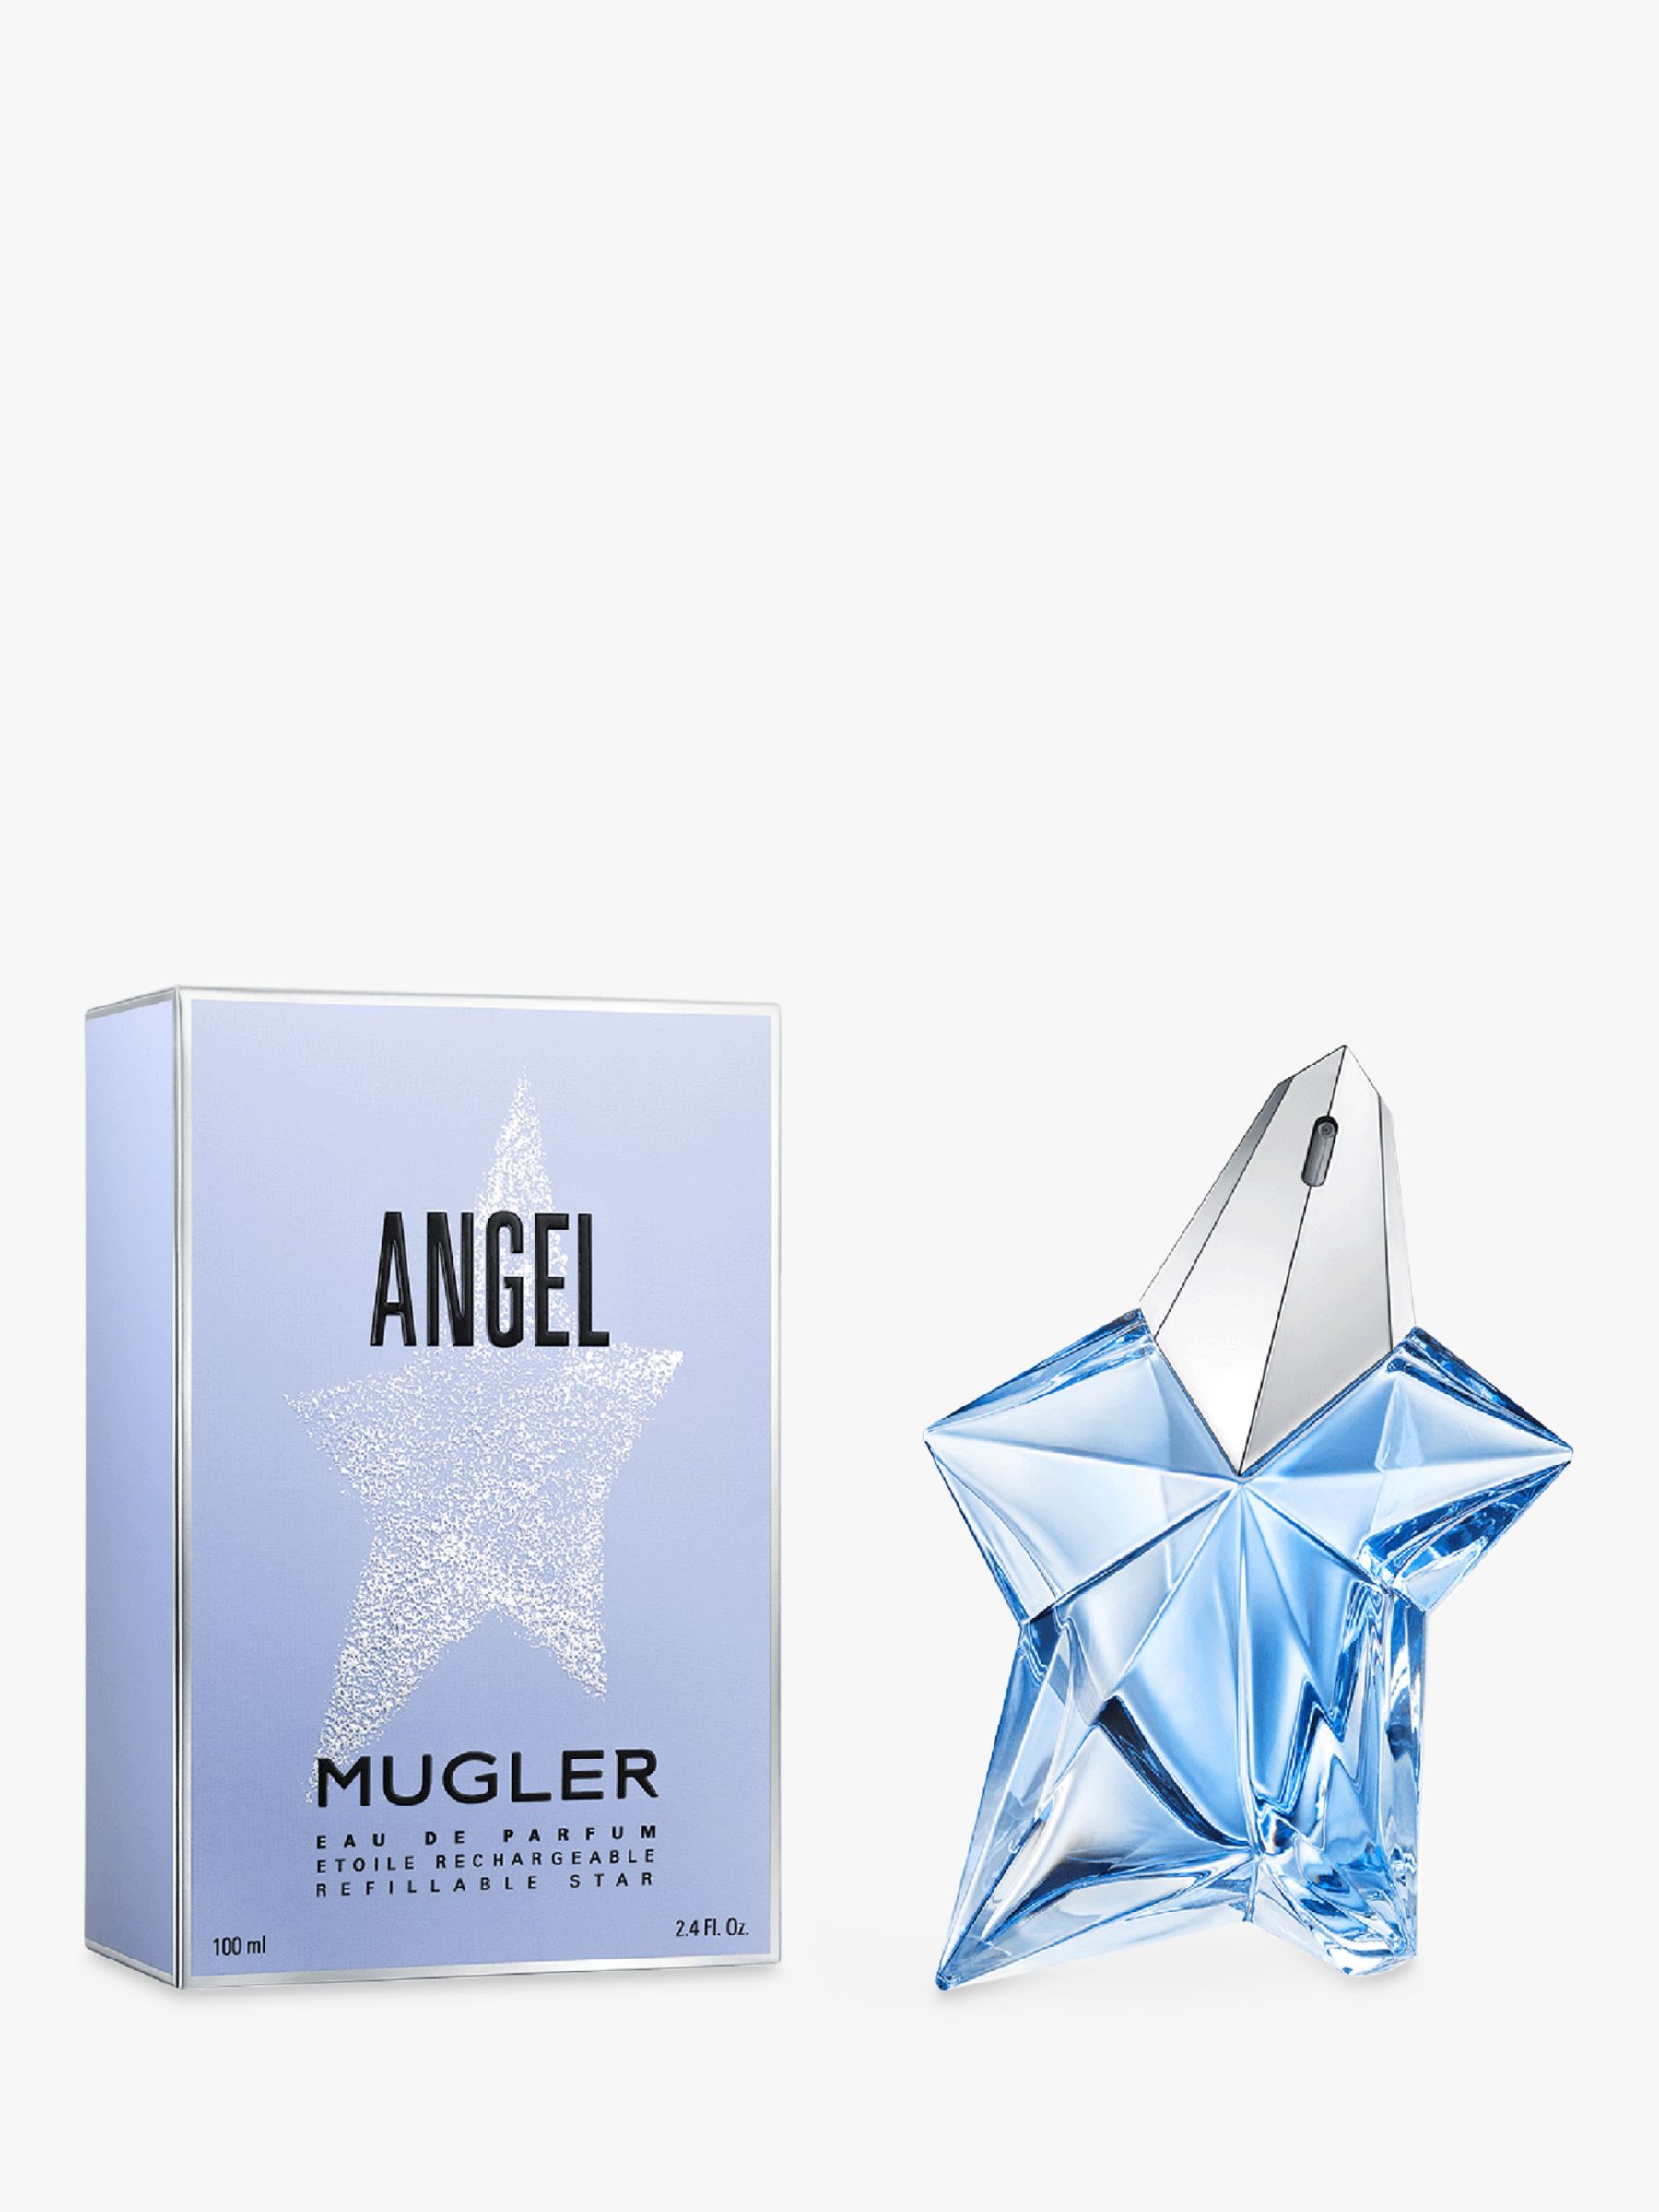 Mugler Angel Eau de Parfum Refillable Spray, 100ml